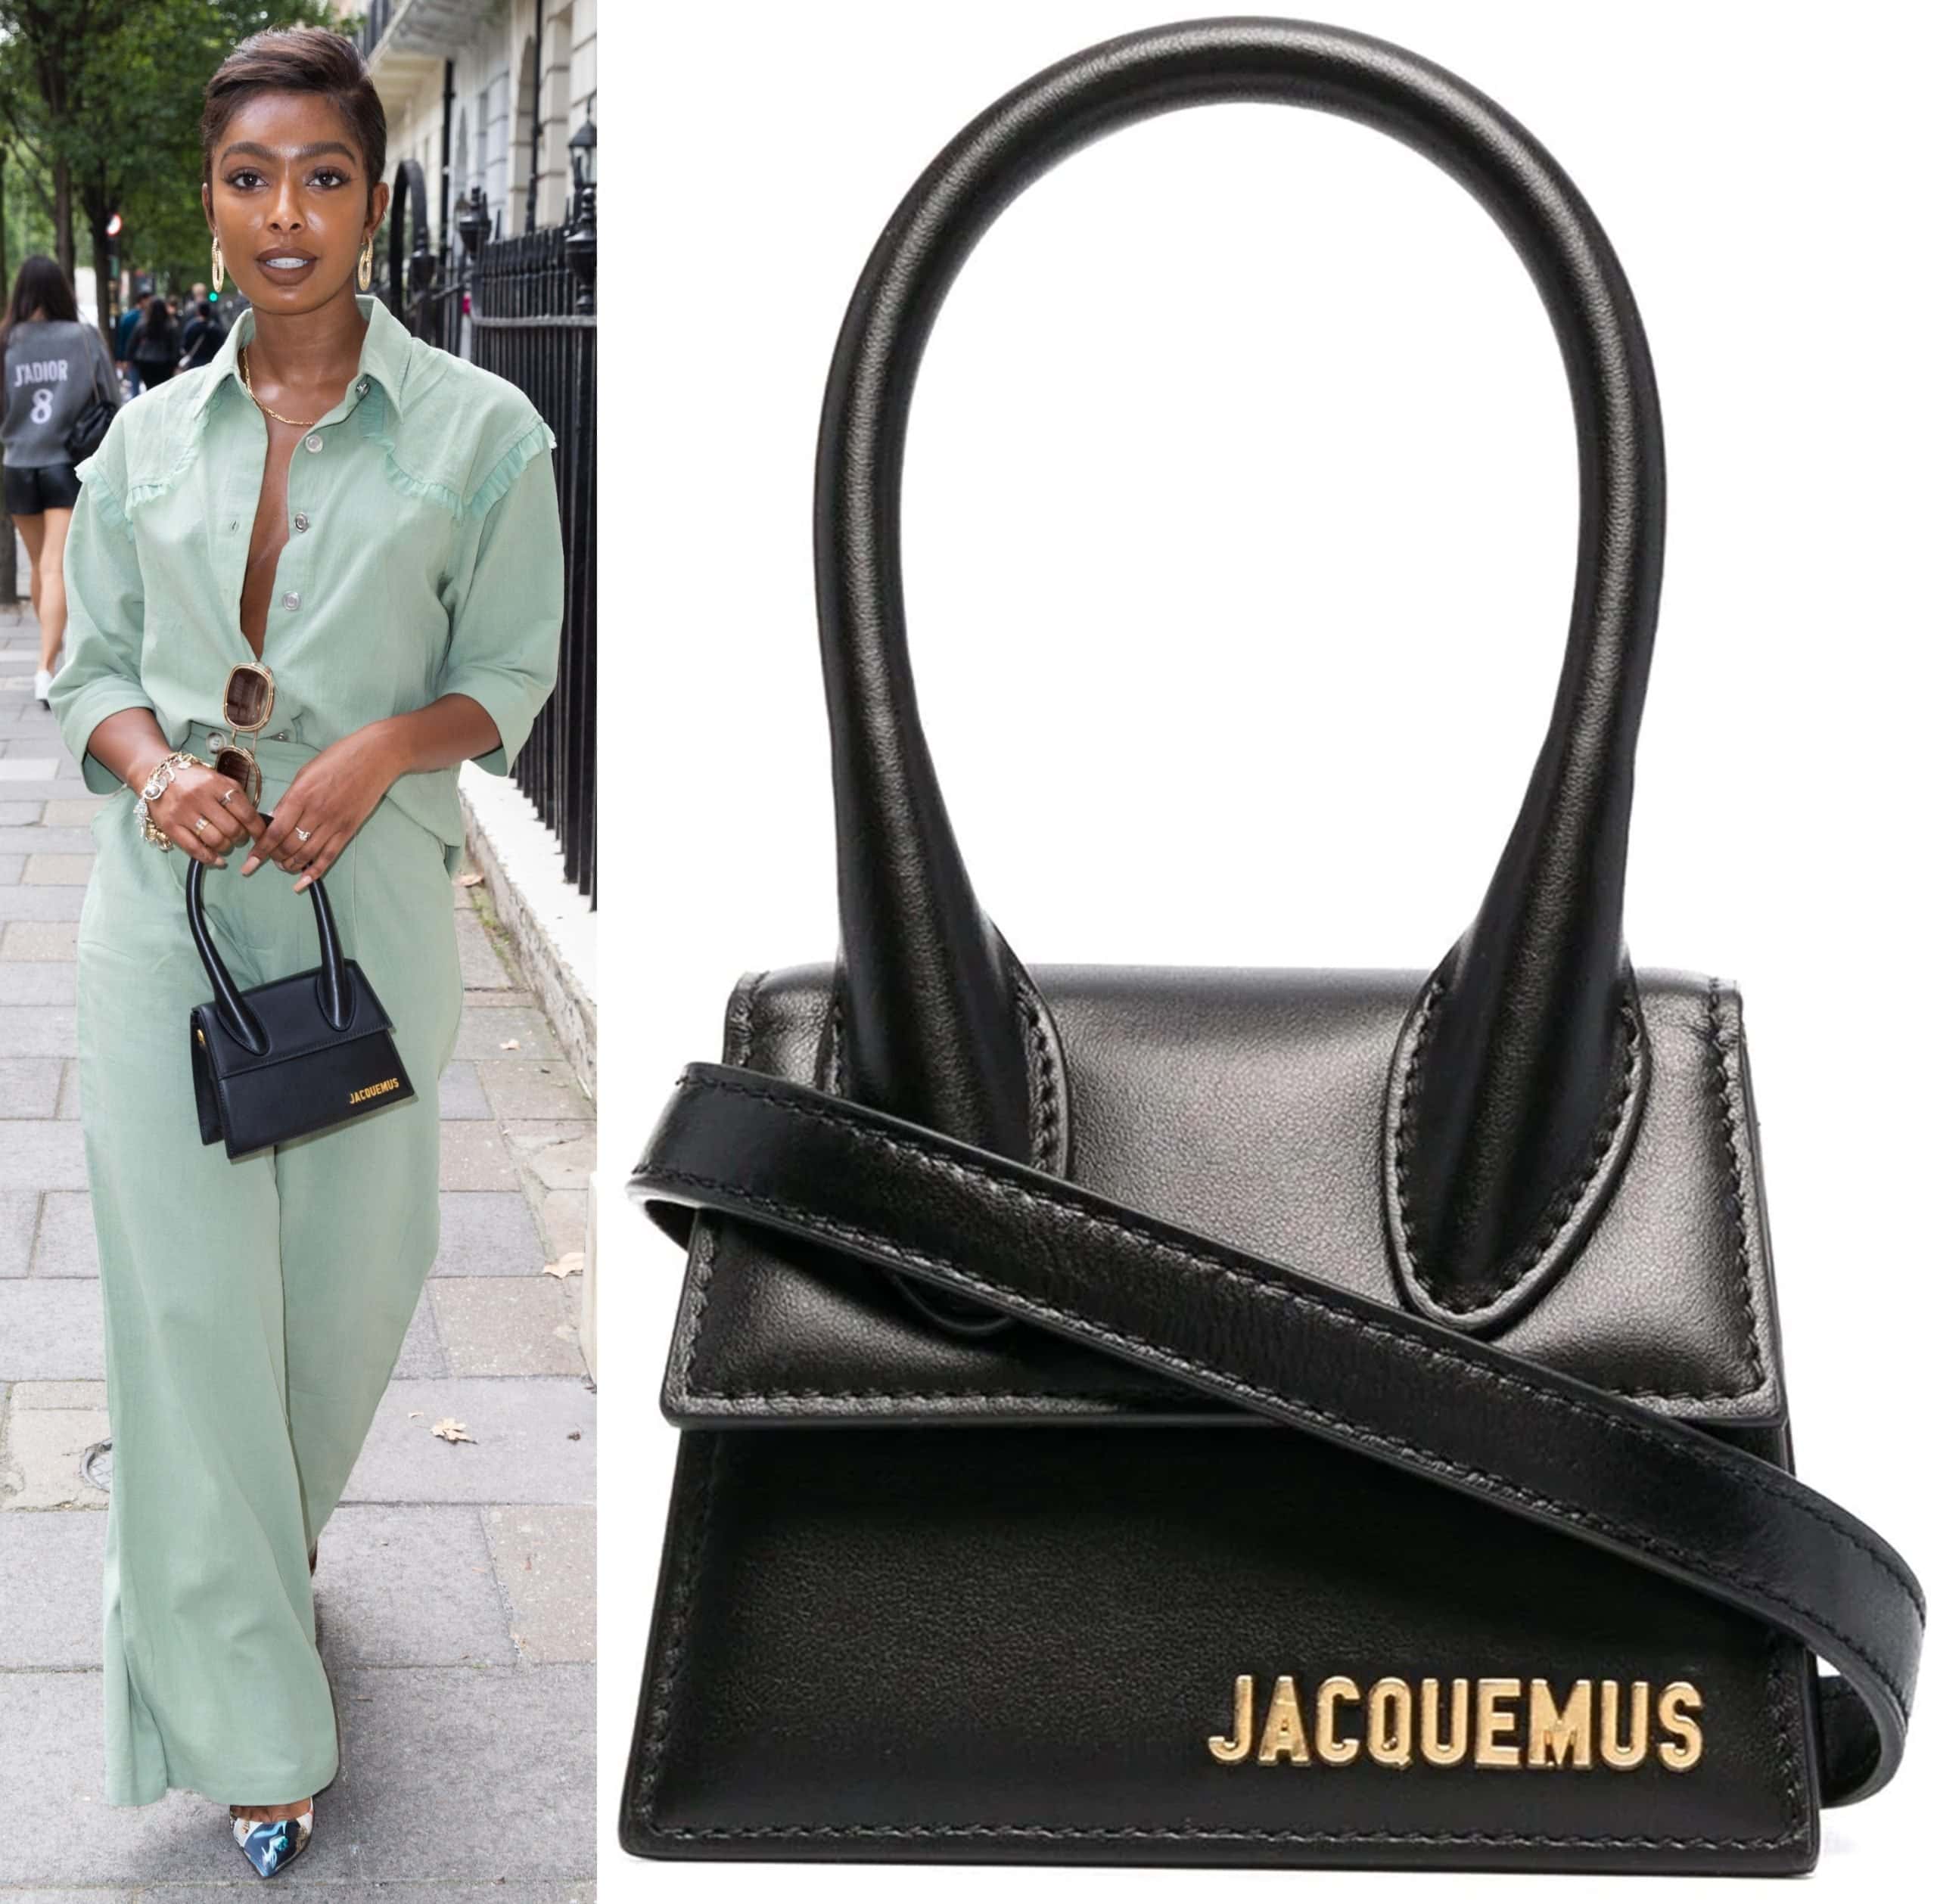 Jourdan Riane totes a black Jacquemus Le Chiquito mini top-handle bag